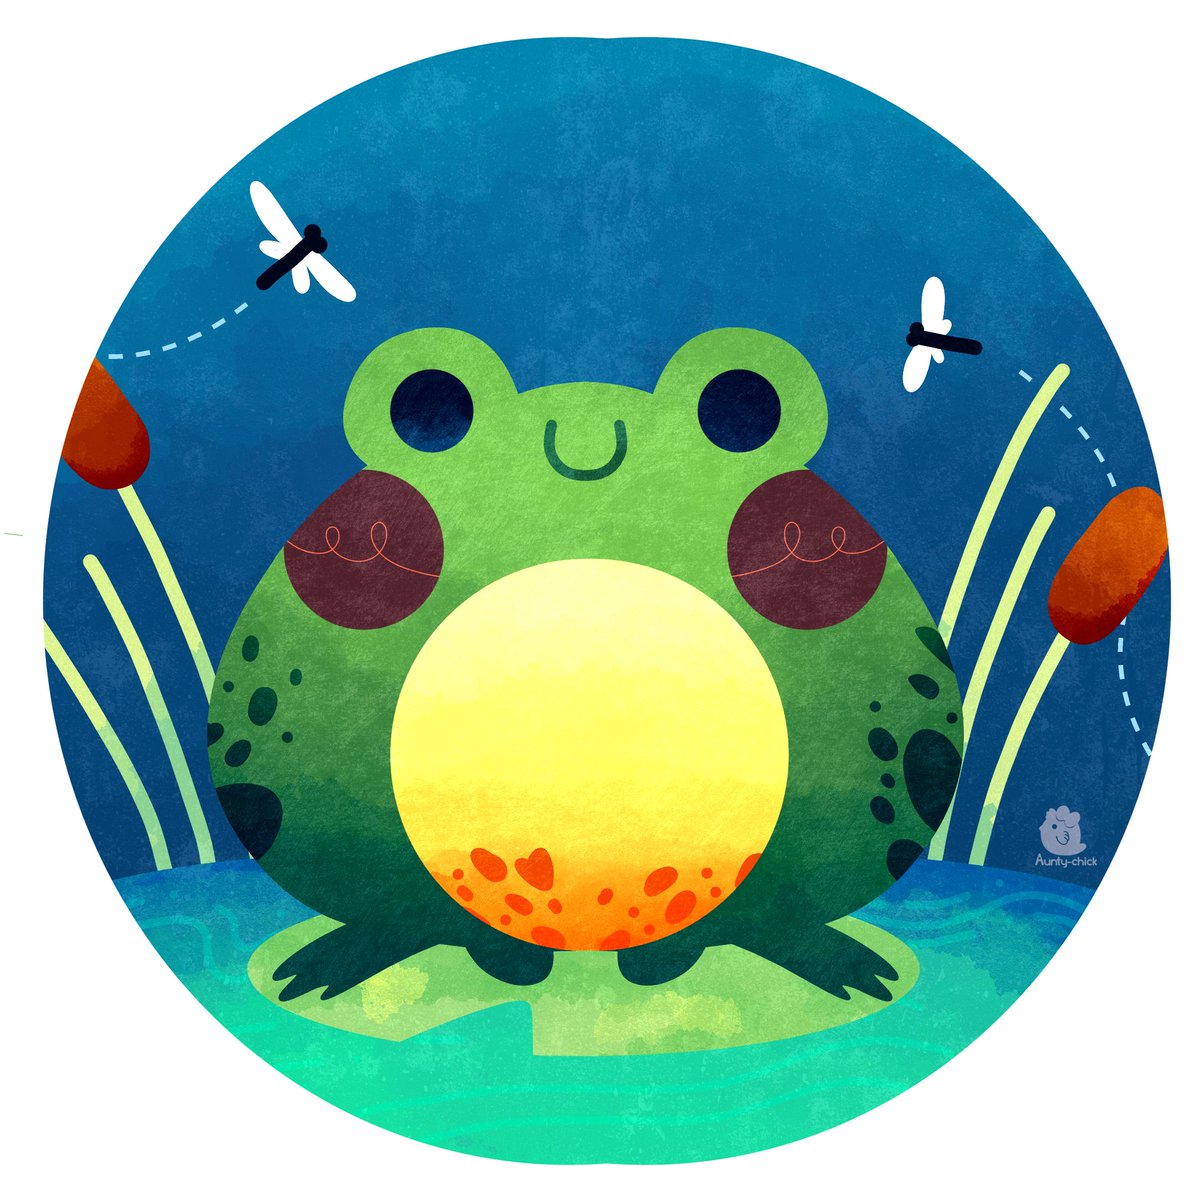 Frog 🐸💚

#イラスト #art #illustration #phreg #FROG #childrenbook #cute